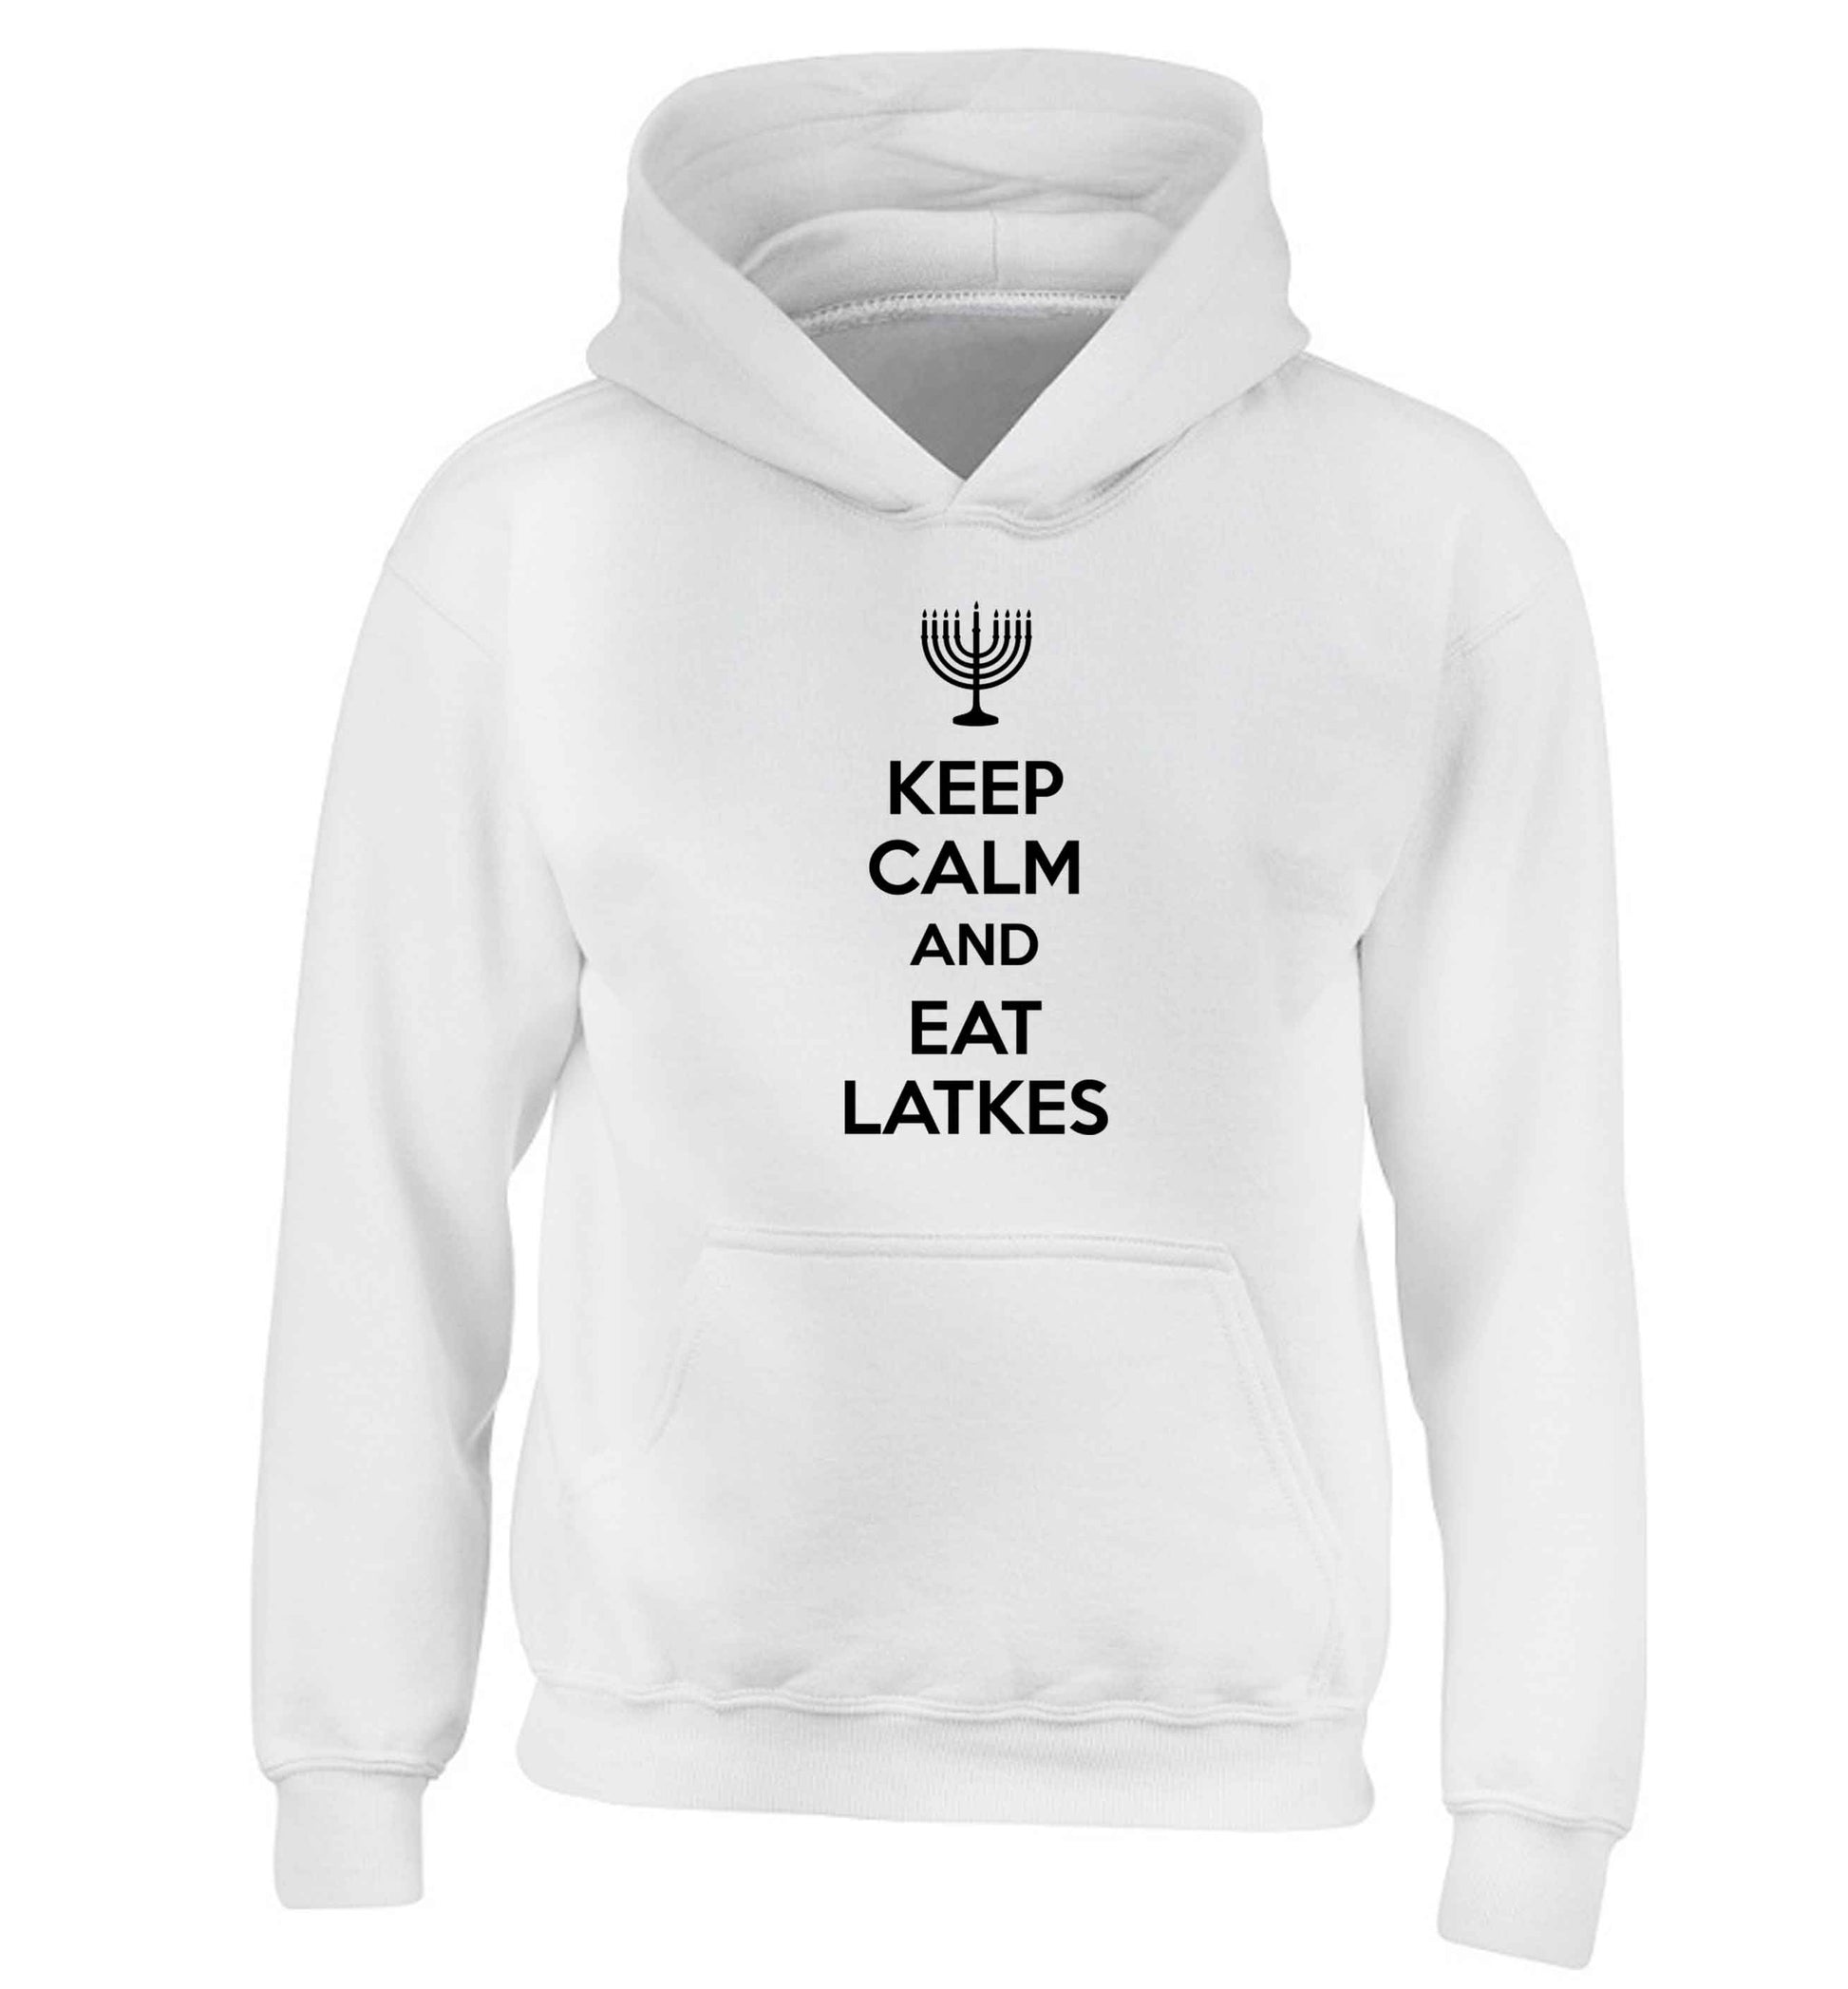 Keep calm and eat latkes children's white hoodie 12-13 Years